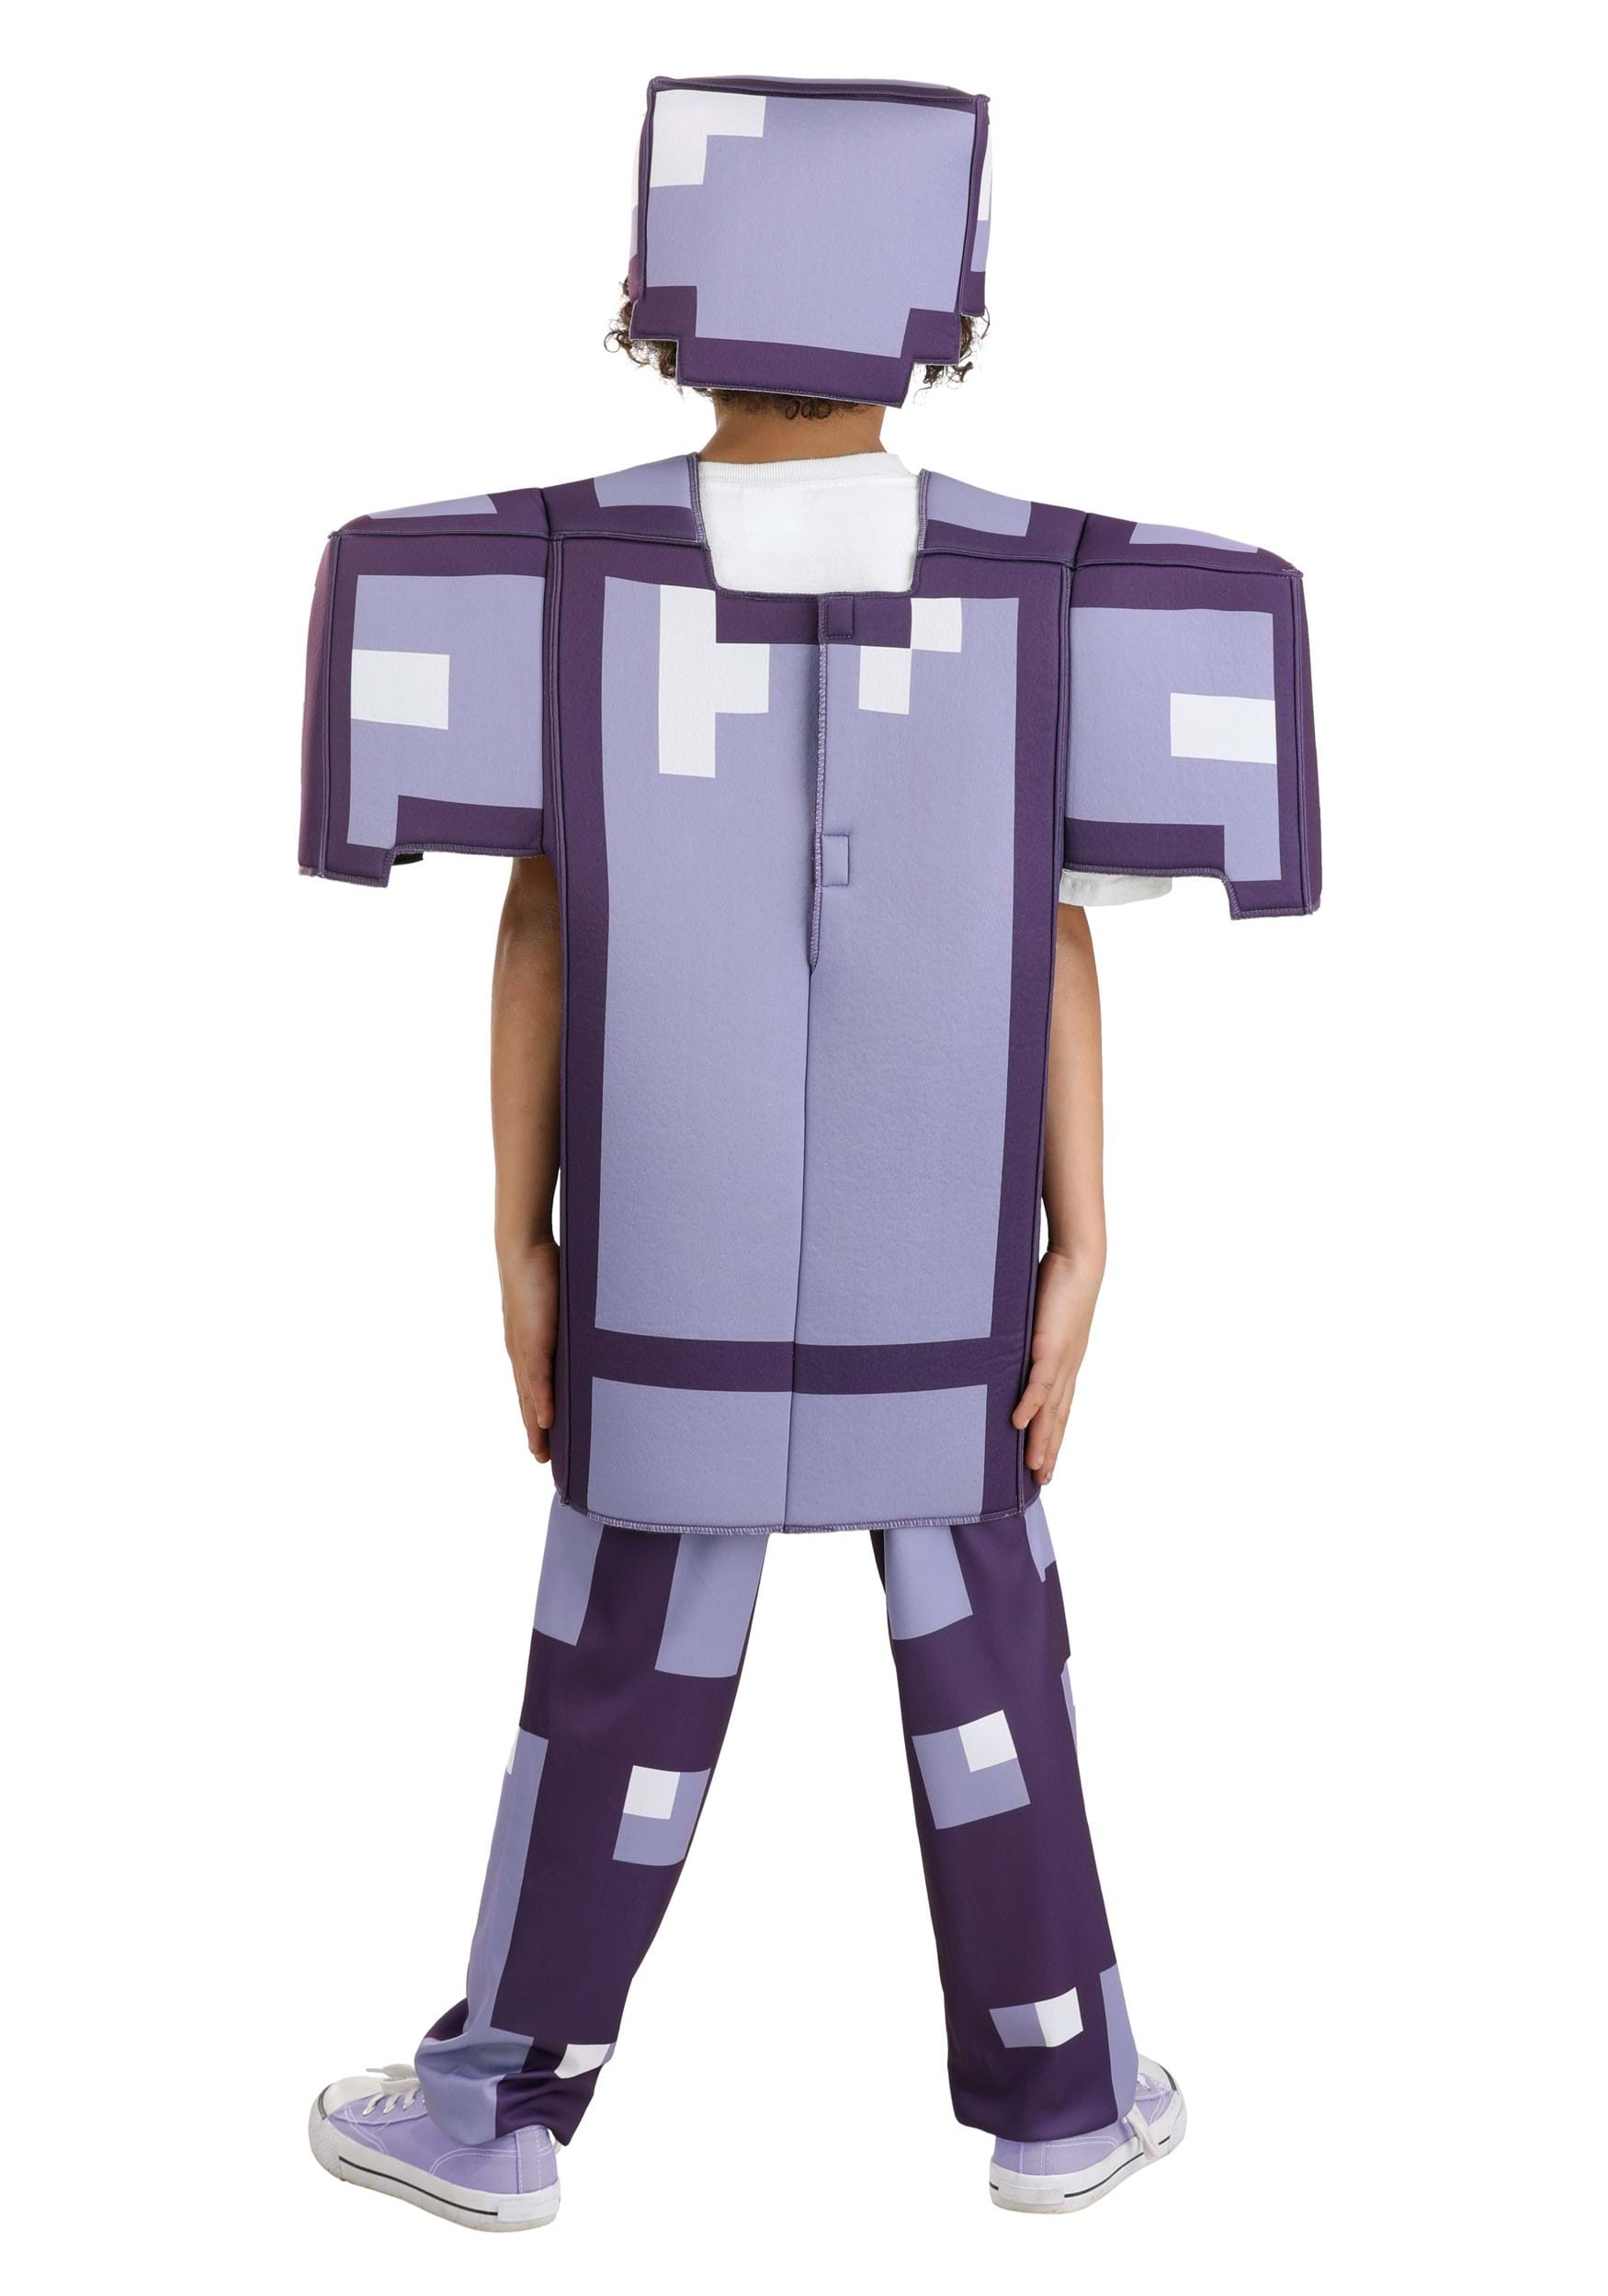 Minecraft Netherite Armor Deluxe Child Costume : Target